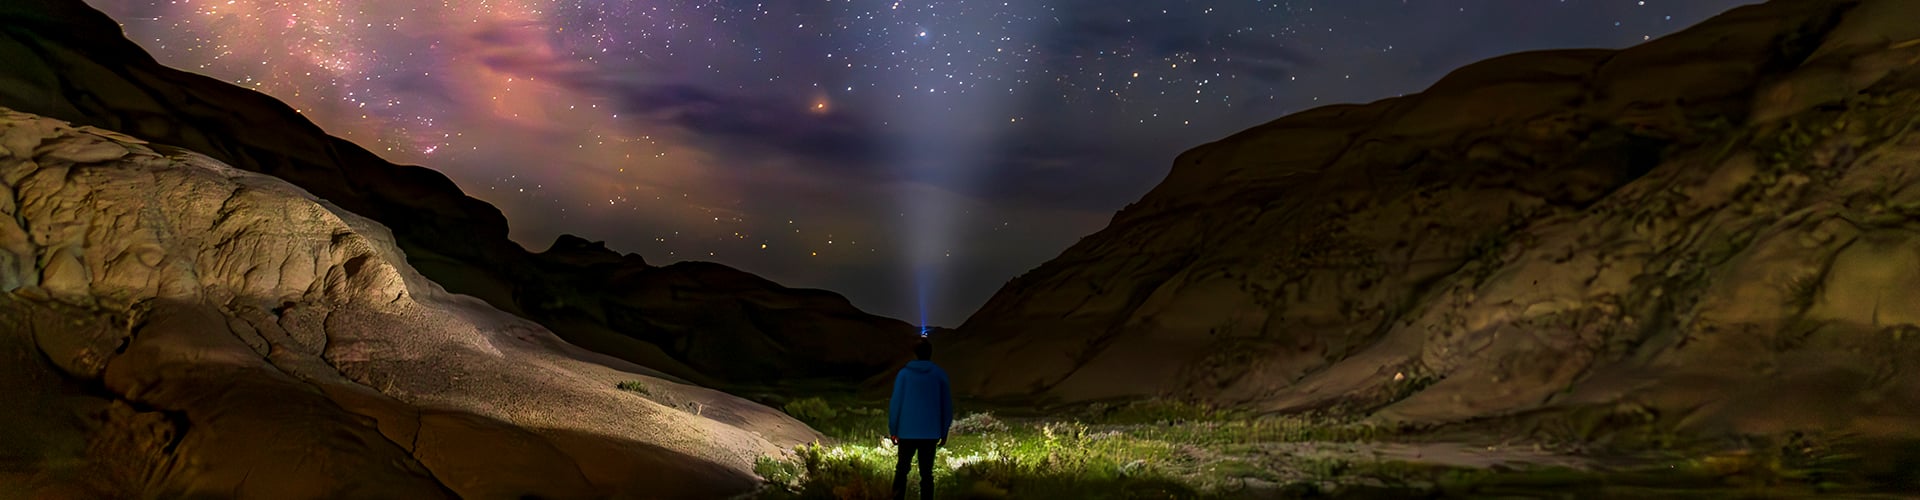 night sky in grasslands national park